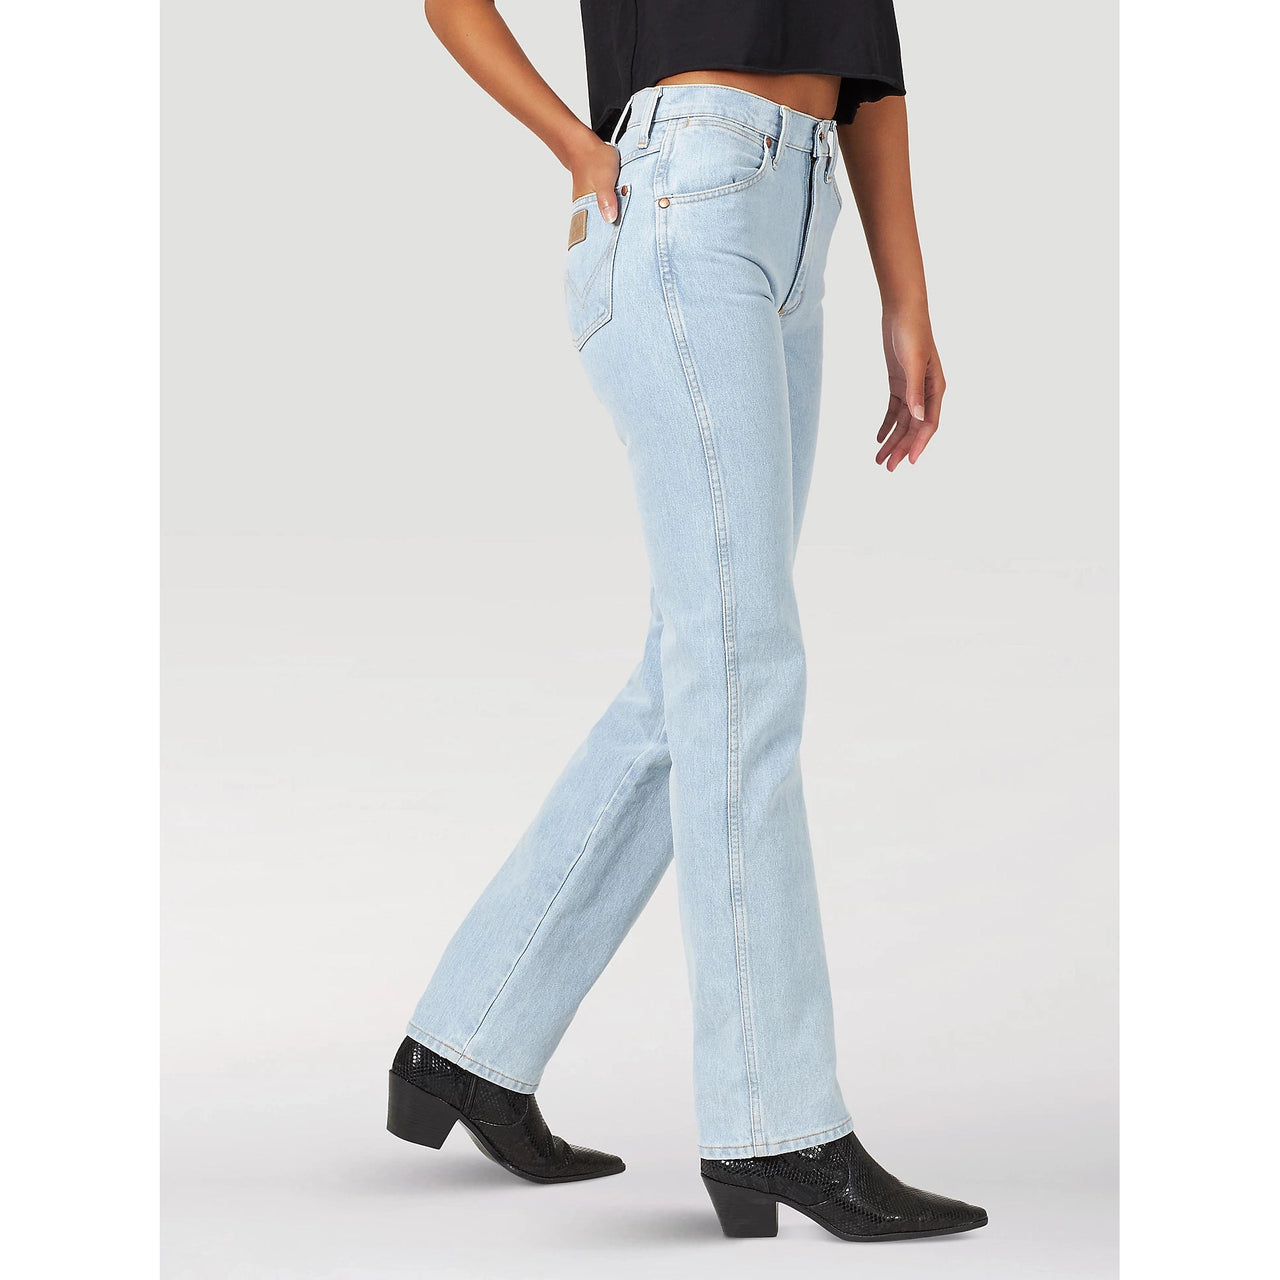 Wrangler Women's Cowboy Cut Slim Fit Jeans - Bleach